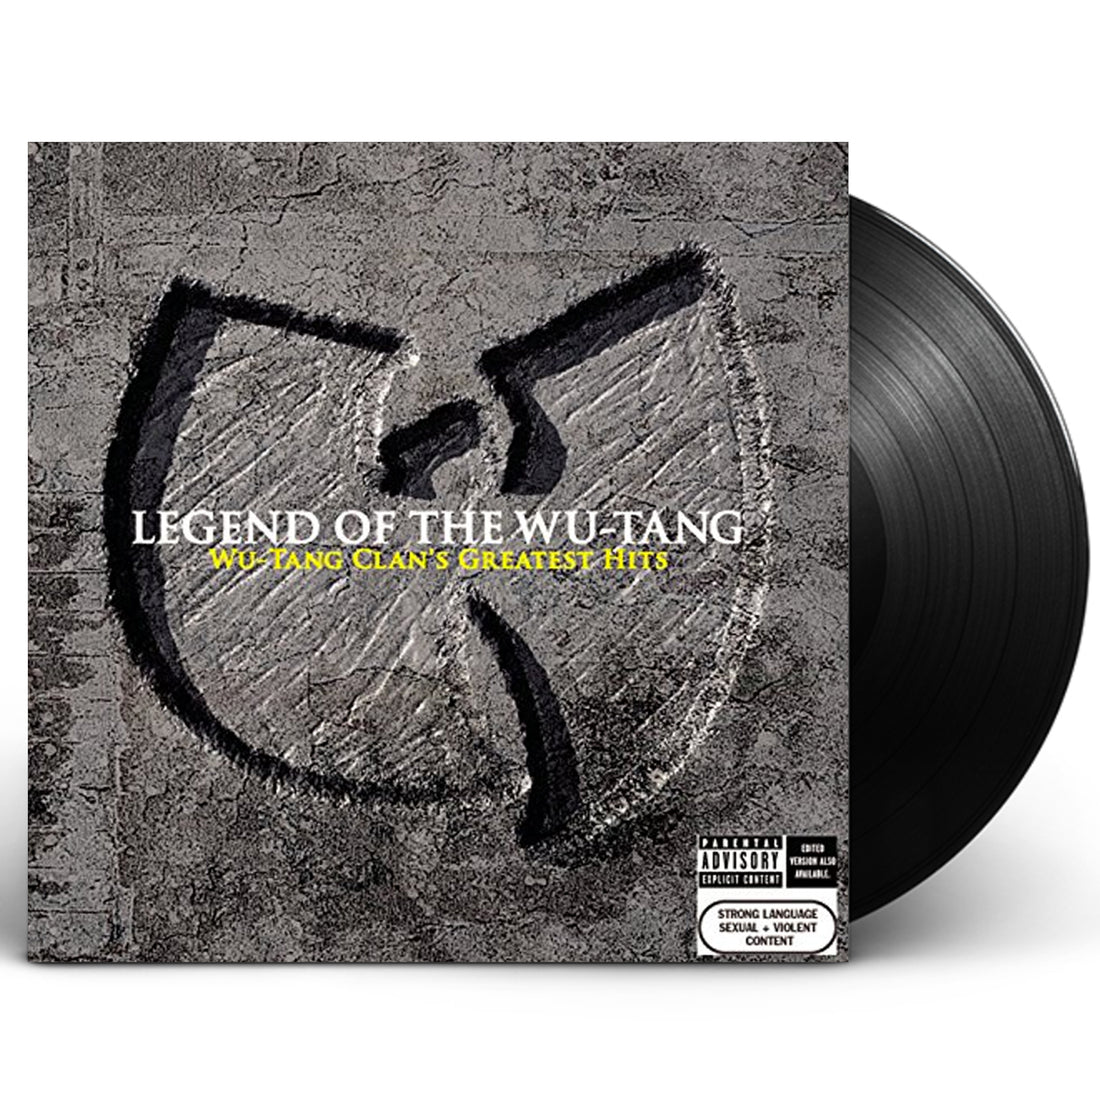 Wu-Tang Clan "Legend of the Wu-Tang: Wu-Tang Clan's Greatest Hits" 2xLP Vinyl